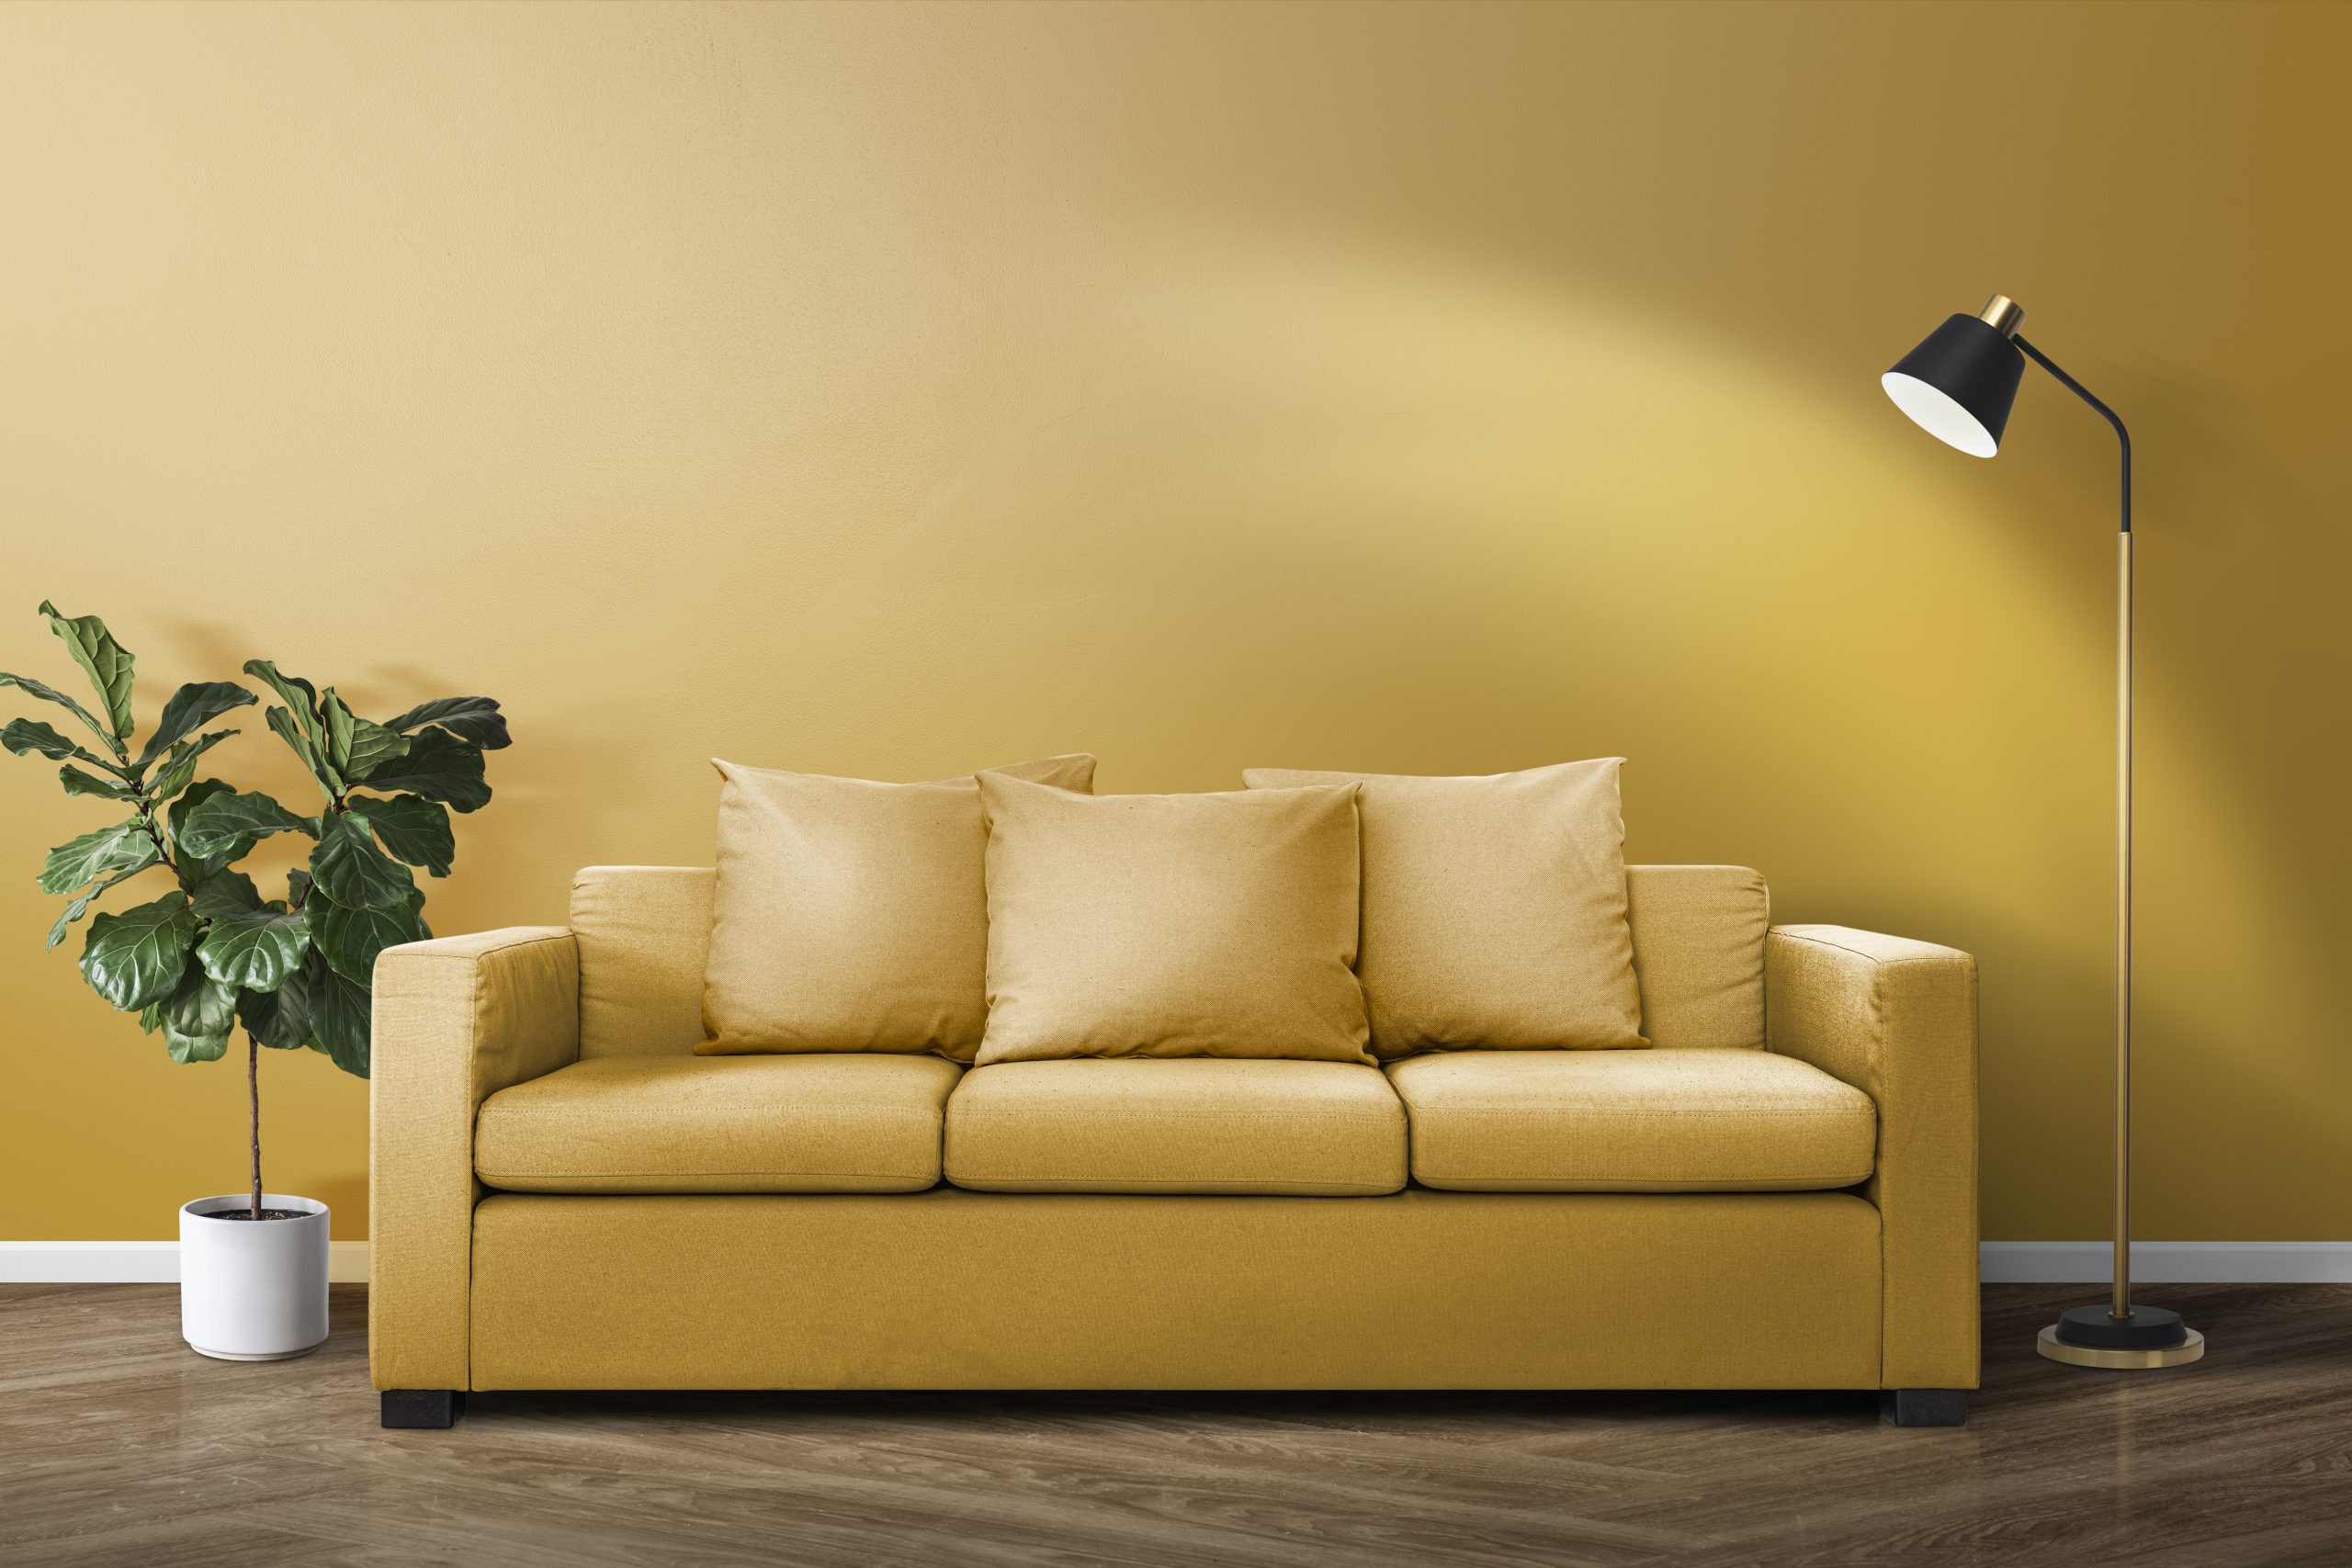 3dmodelingserviceusa Offering Top Quality 3D Furniture Rendering Services